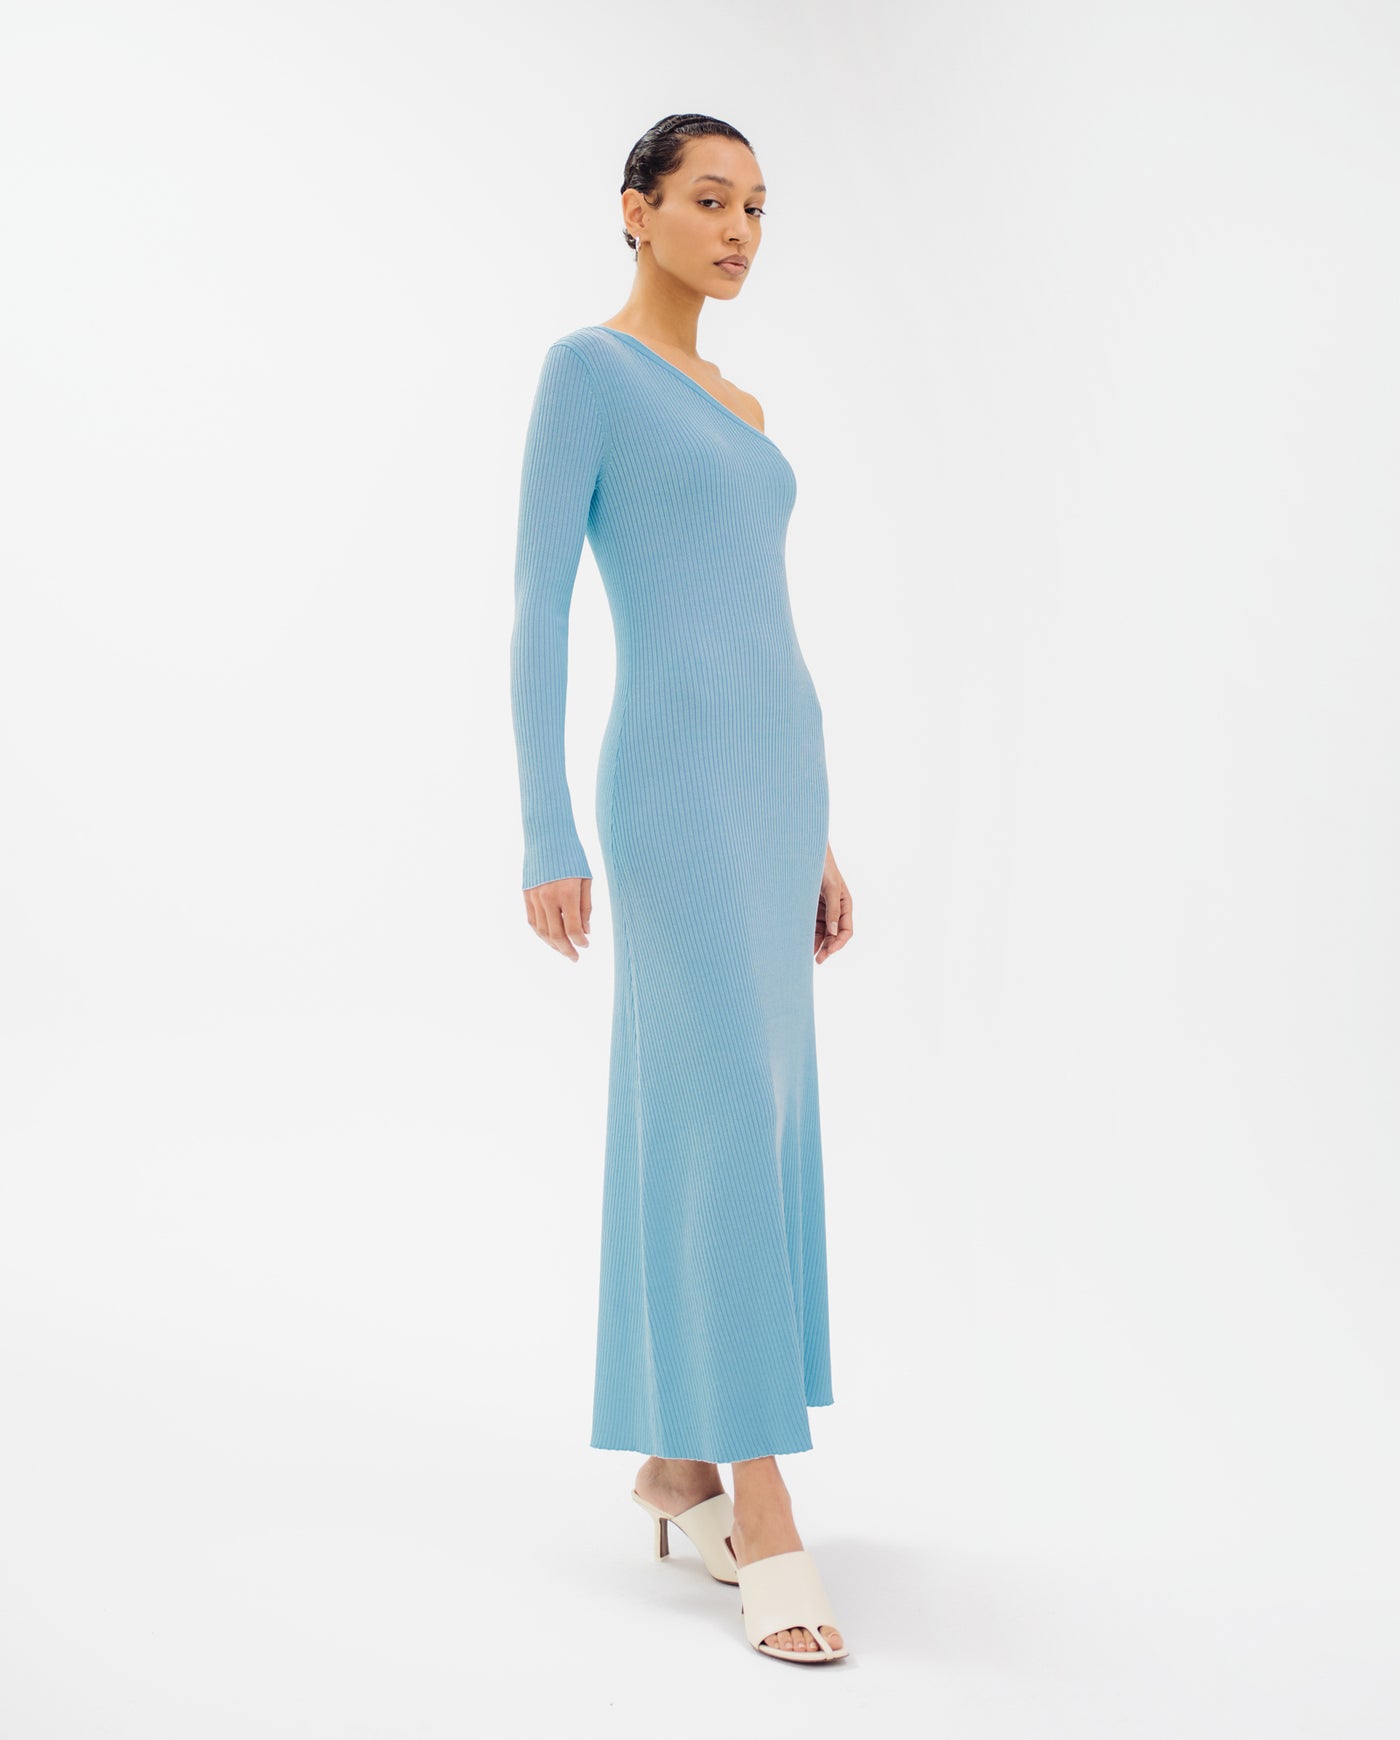 IVY OAK - KYA Dress - IO1123S3115-BL823 - Blue